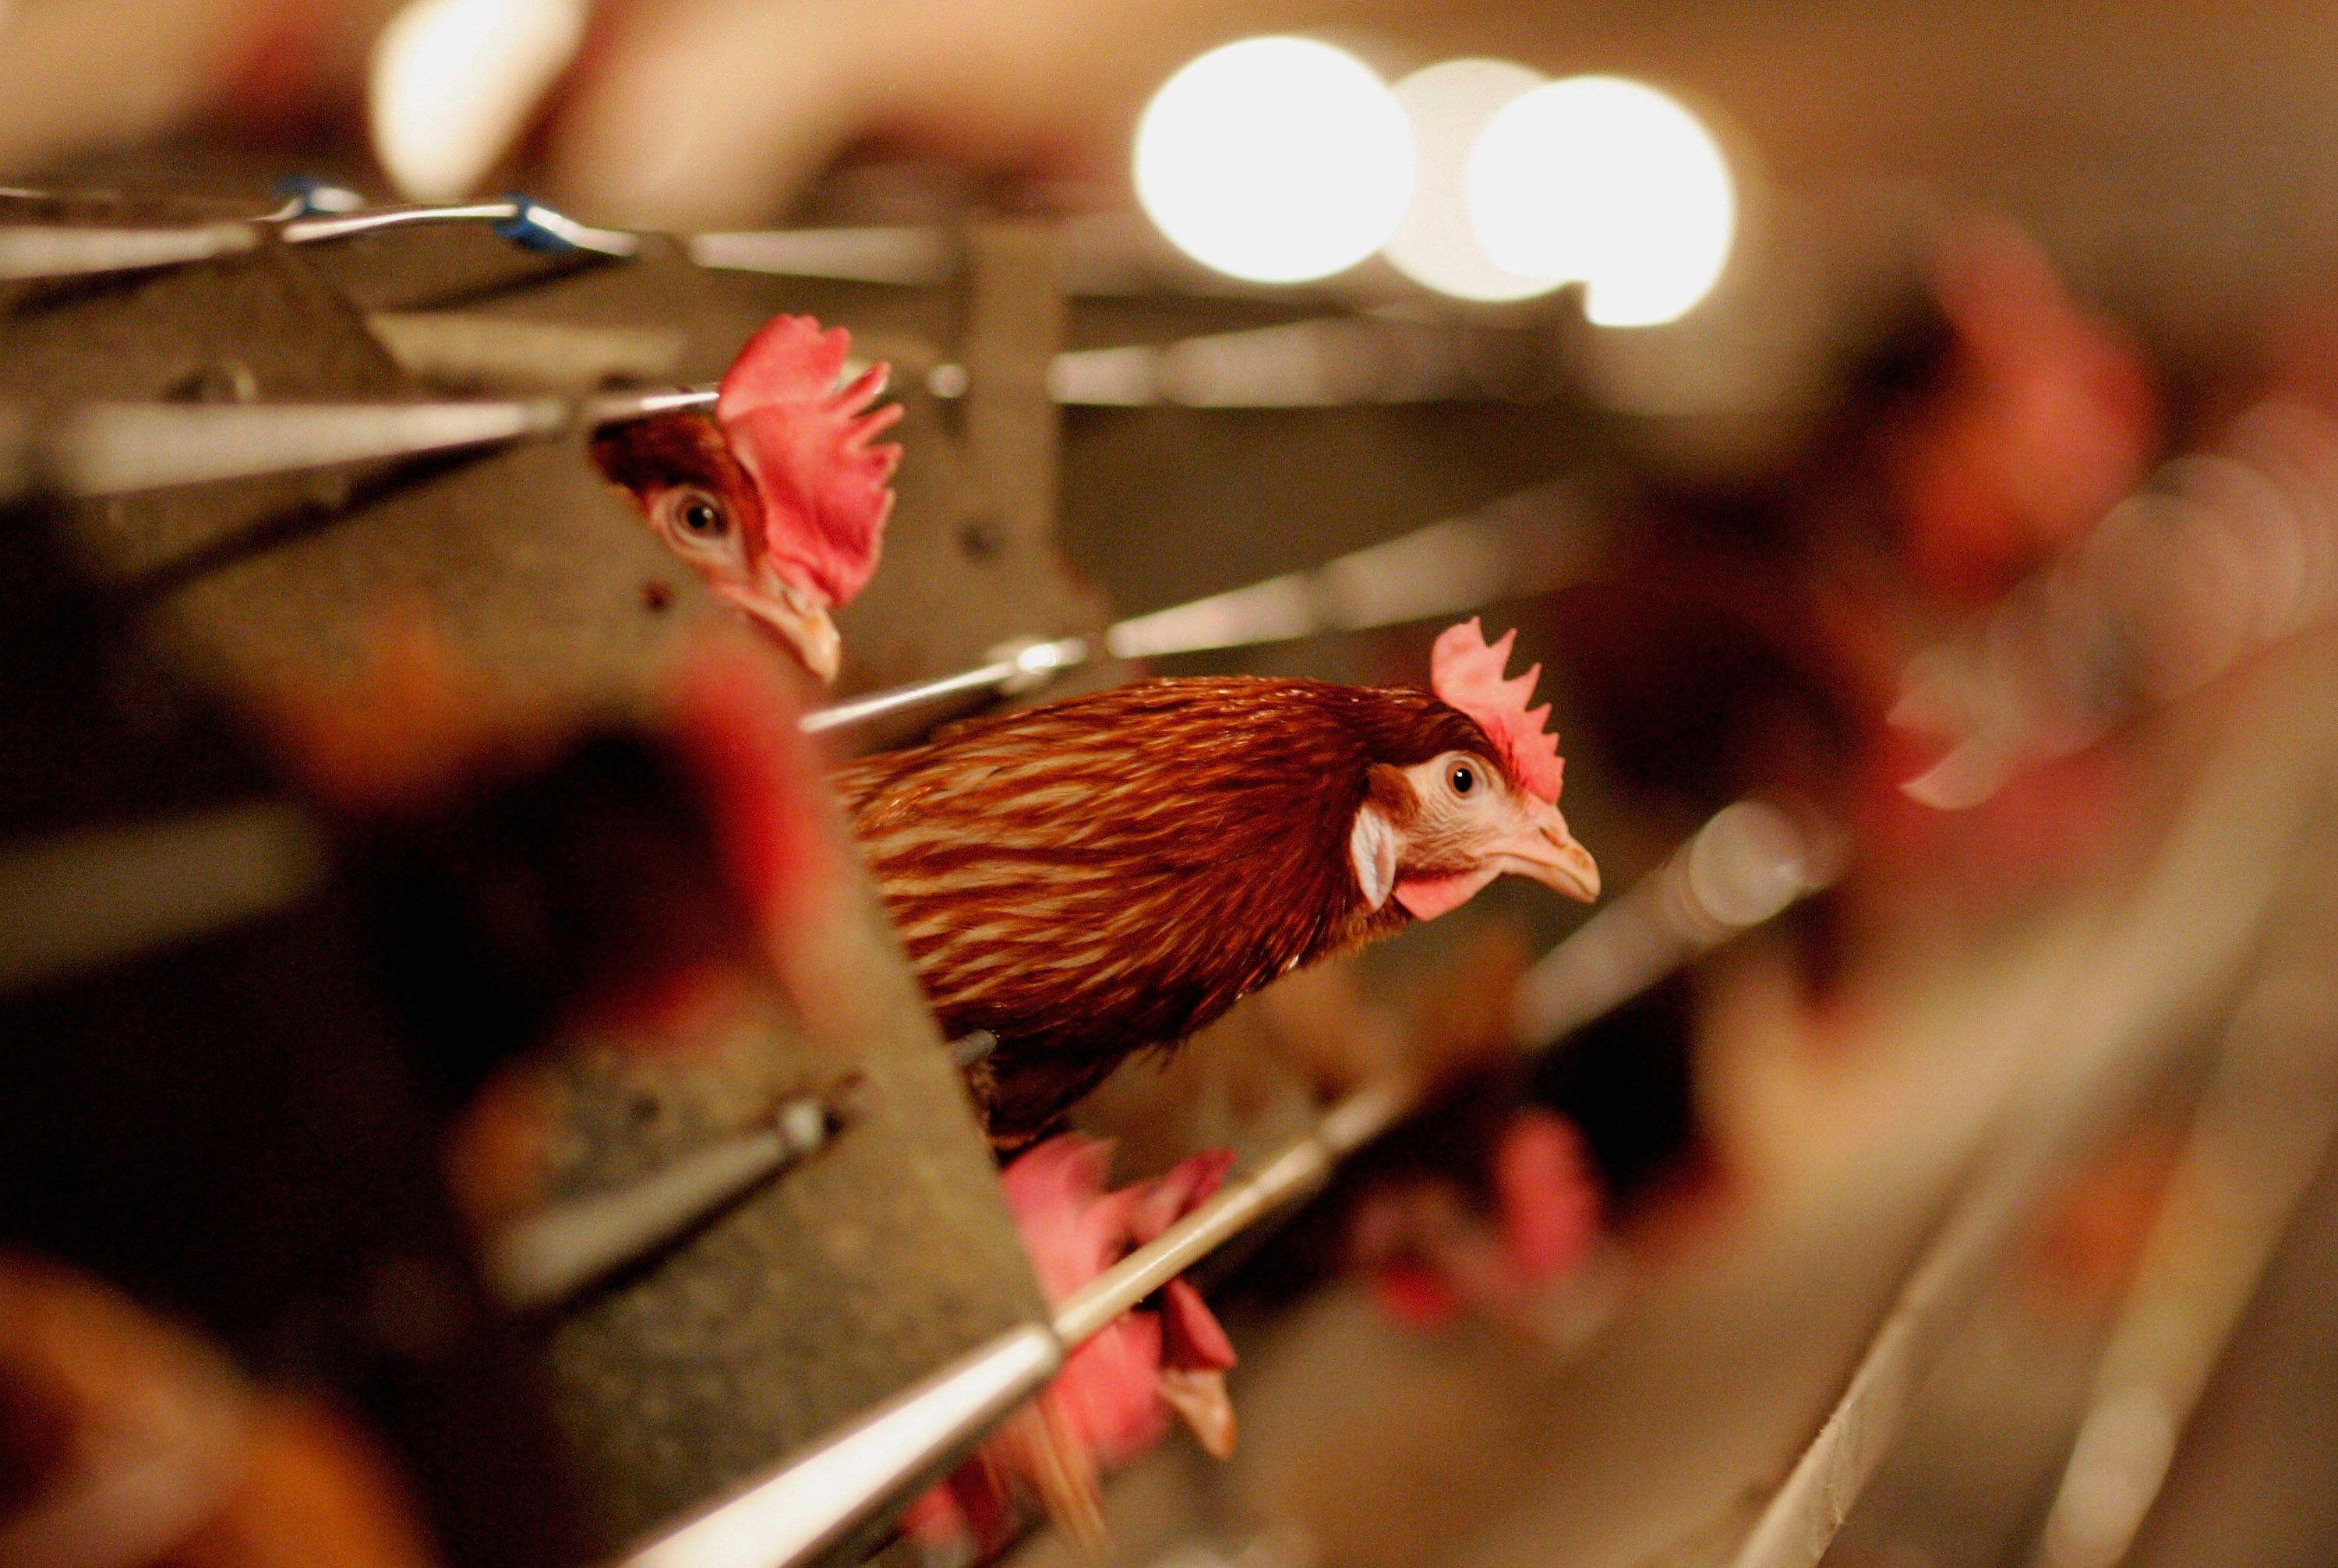 Avian influenza has been spreading quickly in Europe